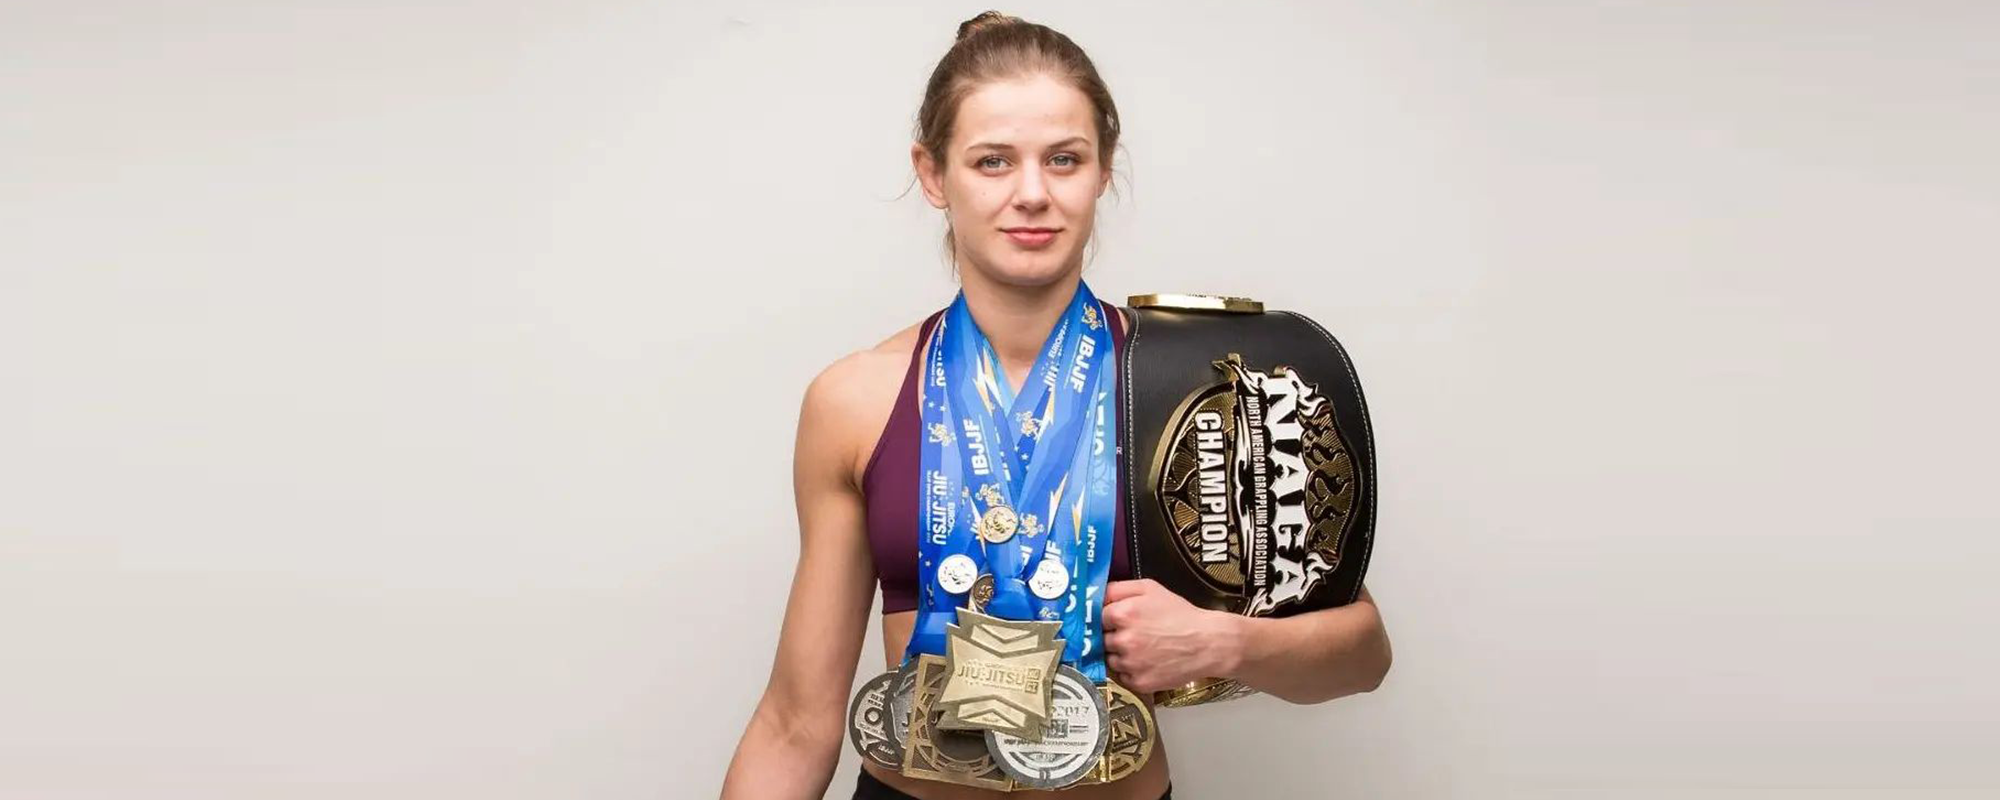 Liisi Vaht - First Estonian Female BJJ Black Belt